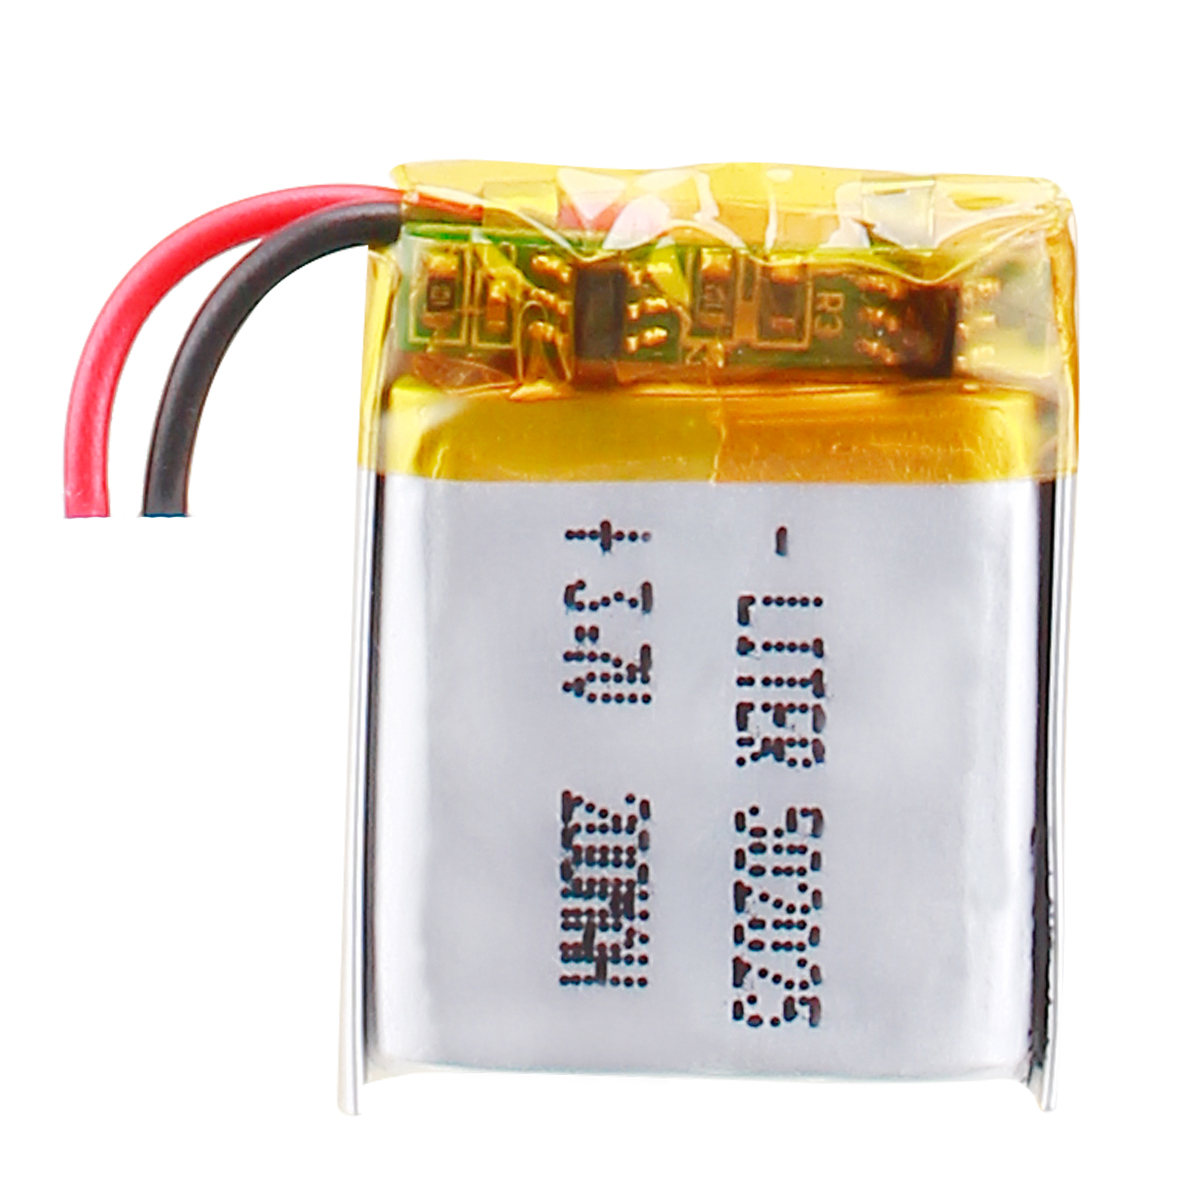 0.777Wh 3.7V LiPo Battery 210mAh 502025